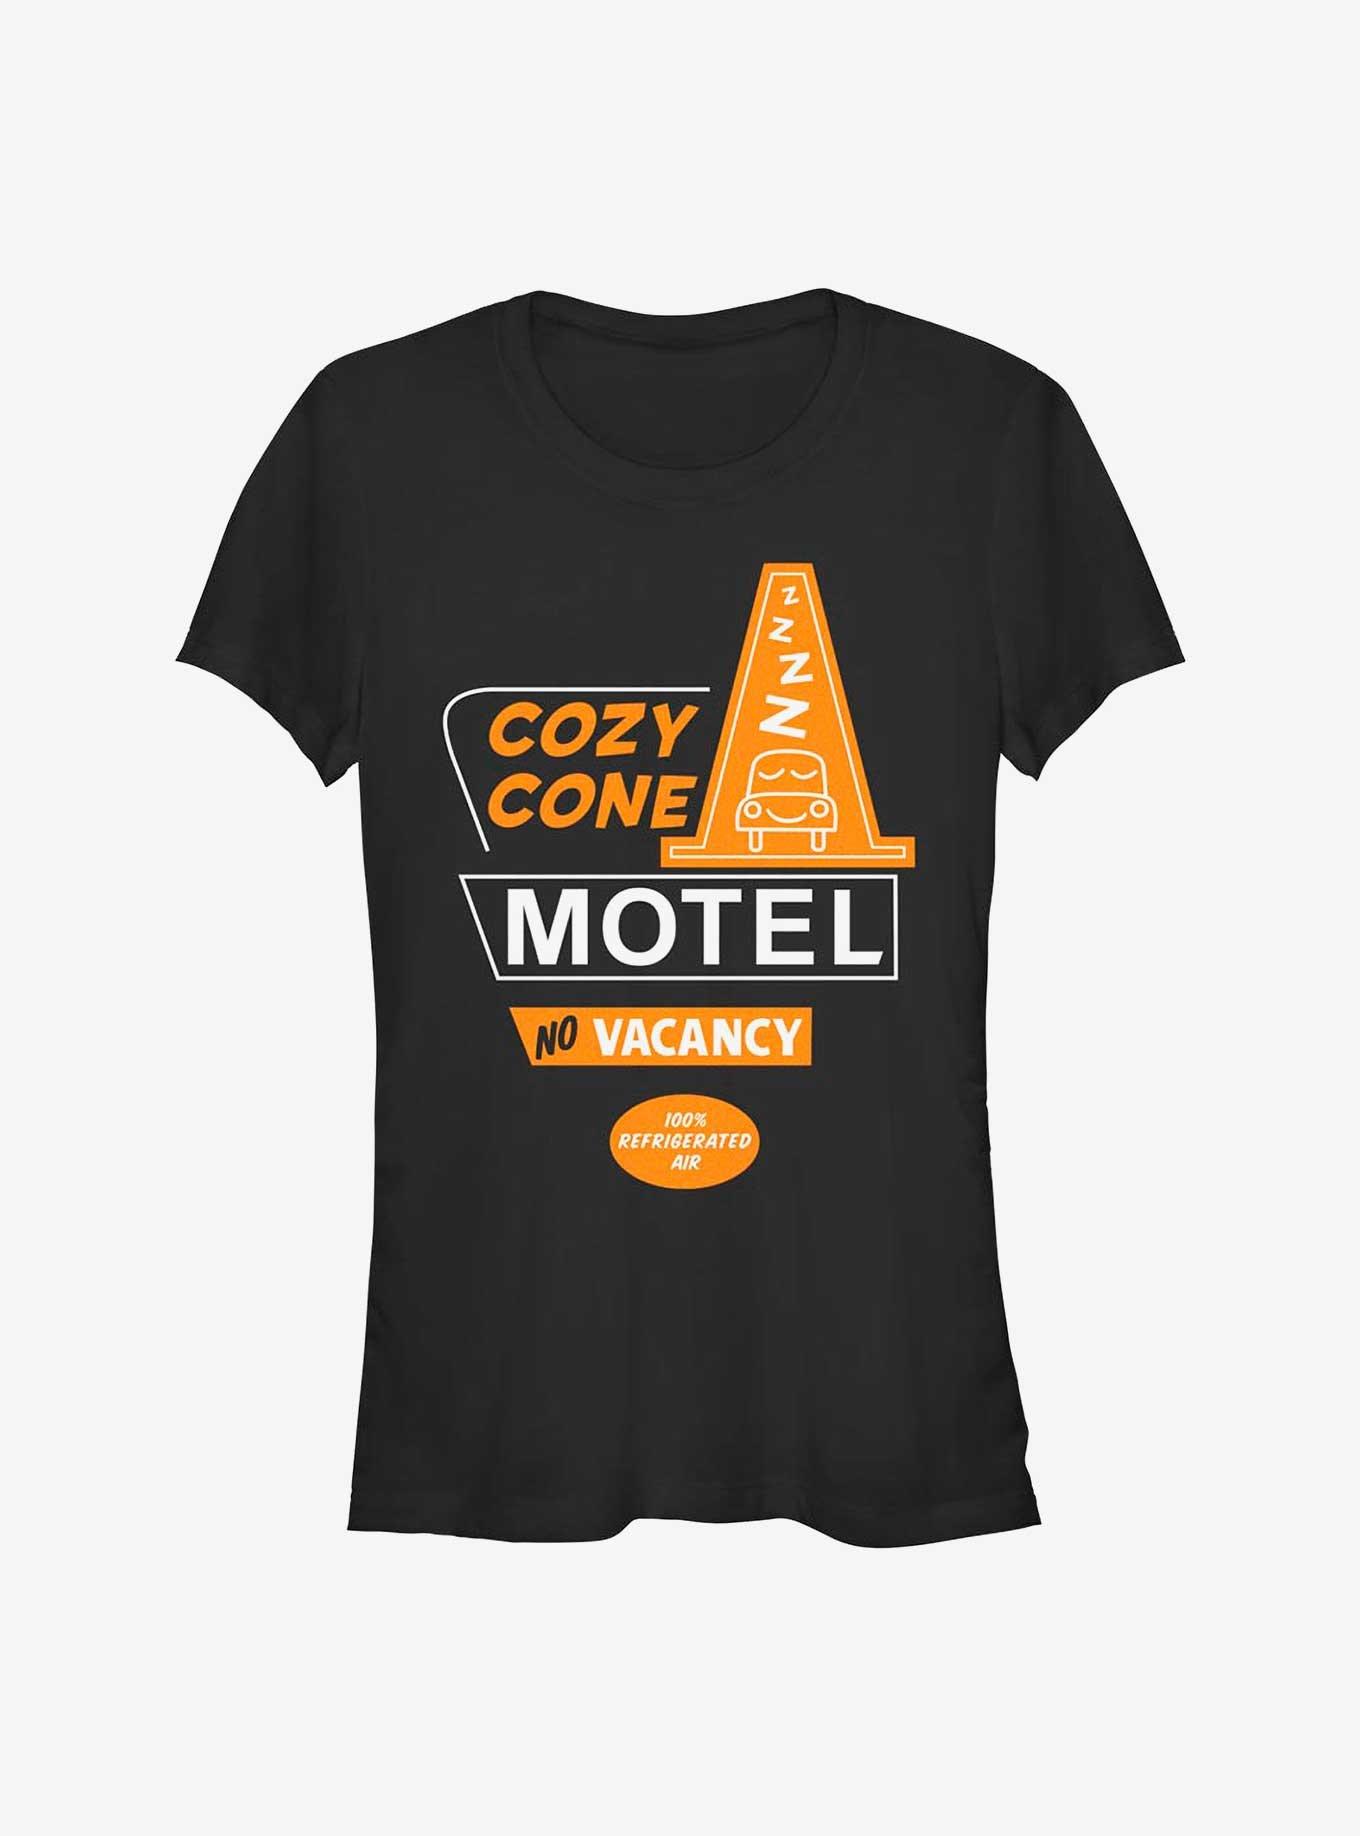 Cars Cozy Cone Motel Girls T-Shirt